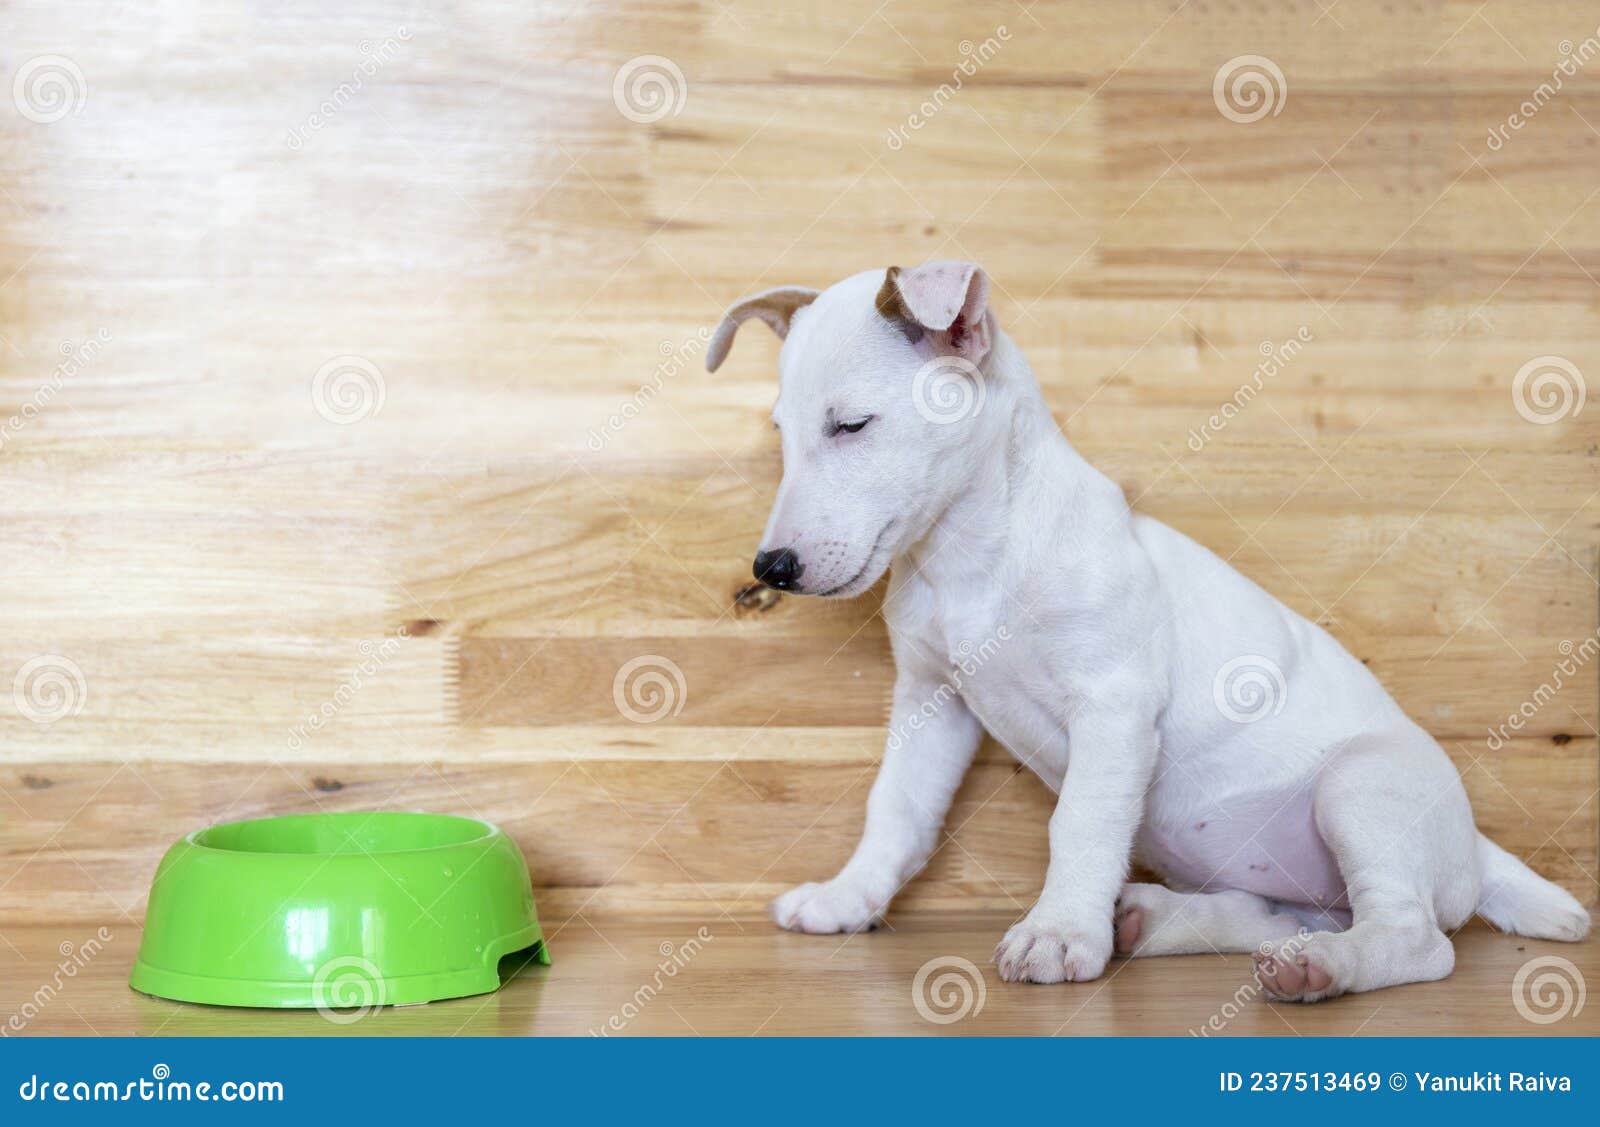 Mini Jack Russel Puppy Dog Boring Food on Wood Stock Image